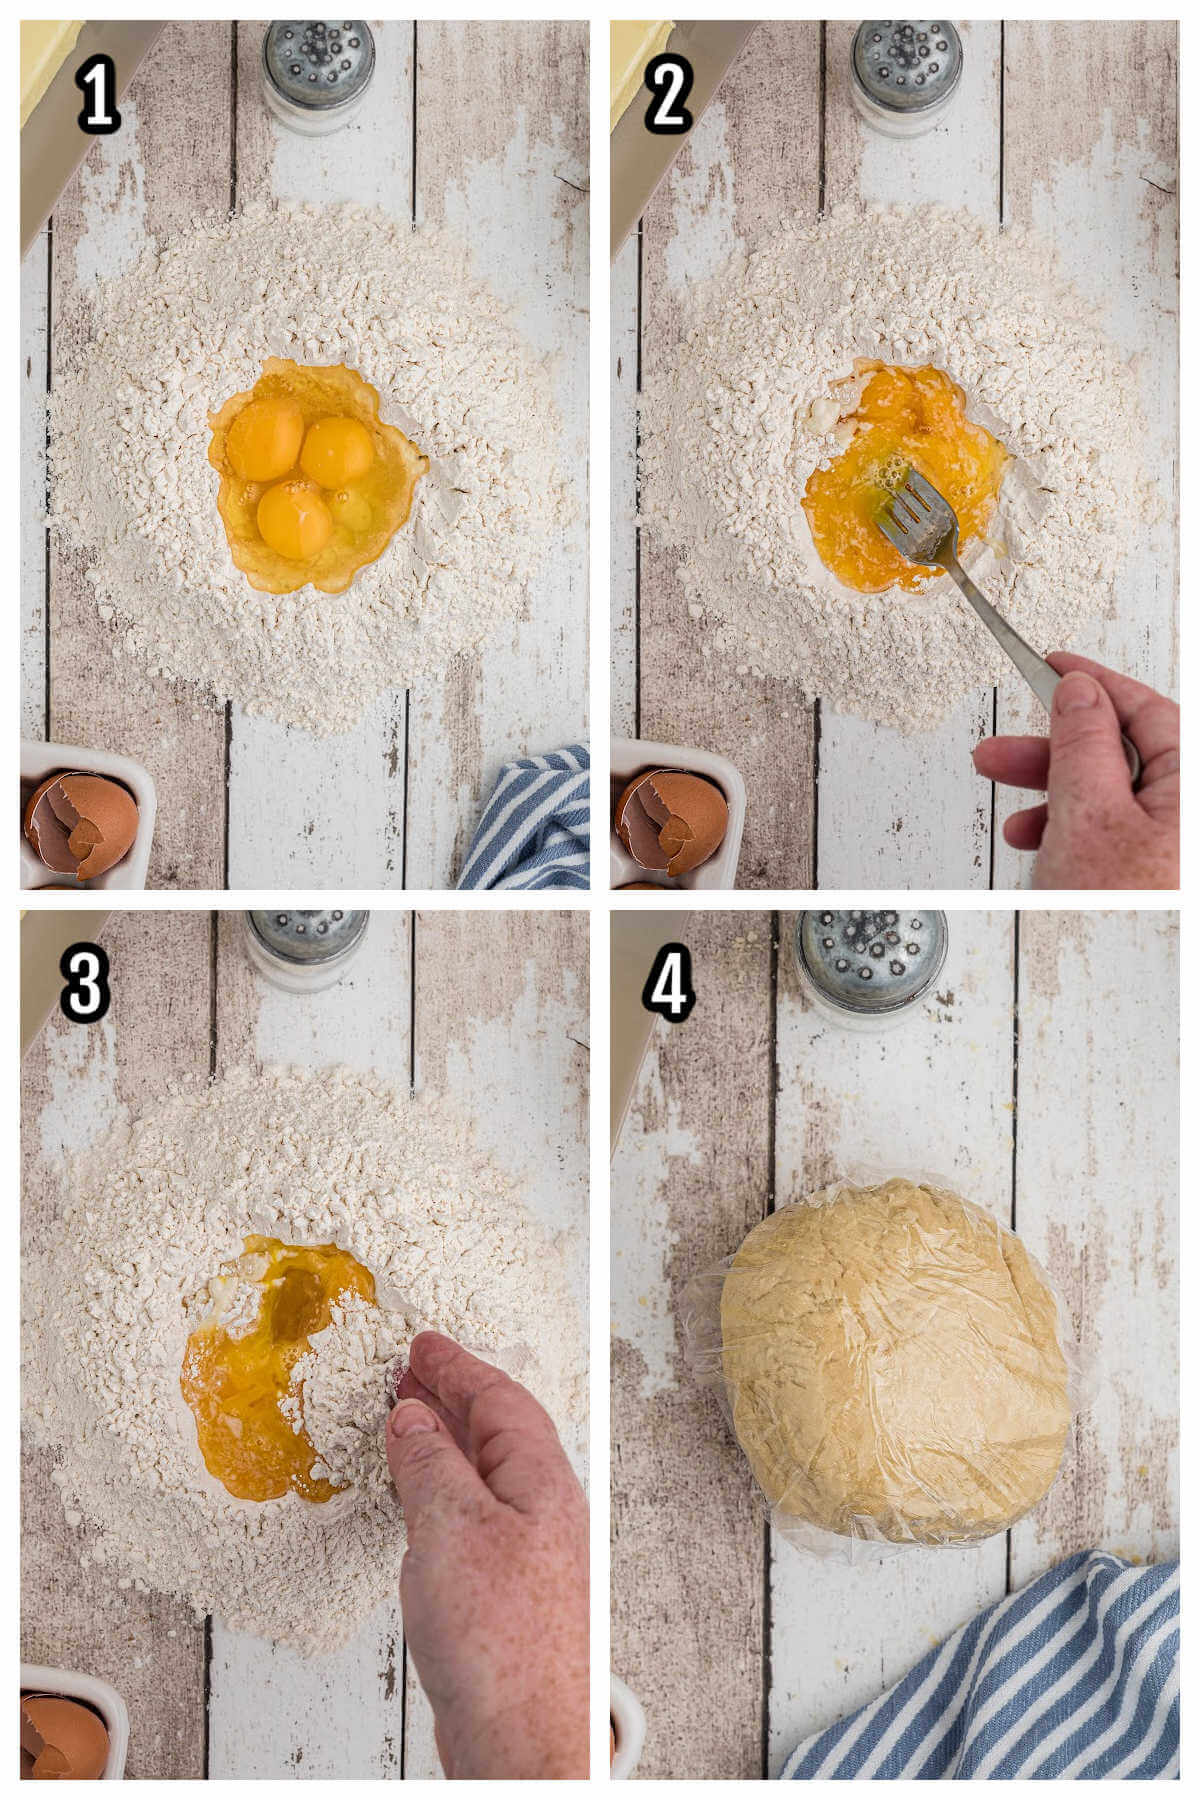 First set of four steps to making homemade pumpkin ravioli. 